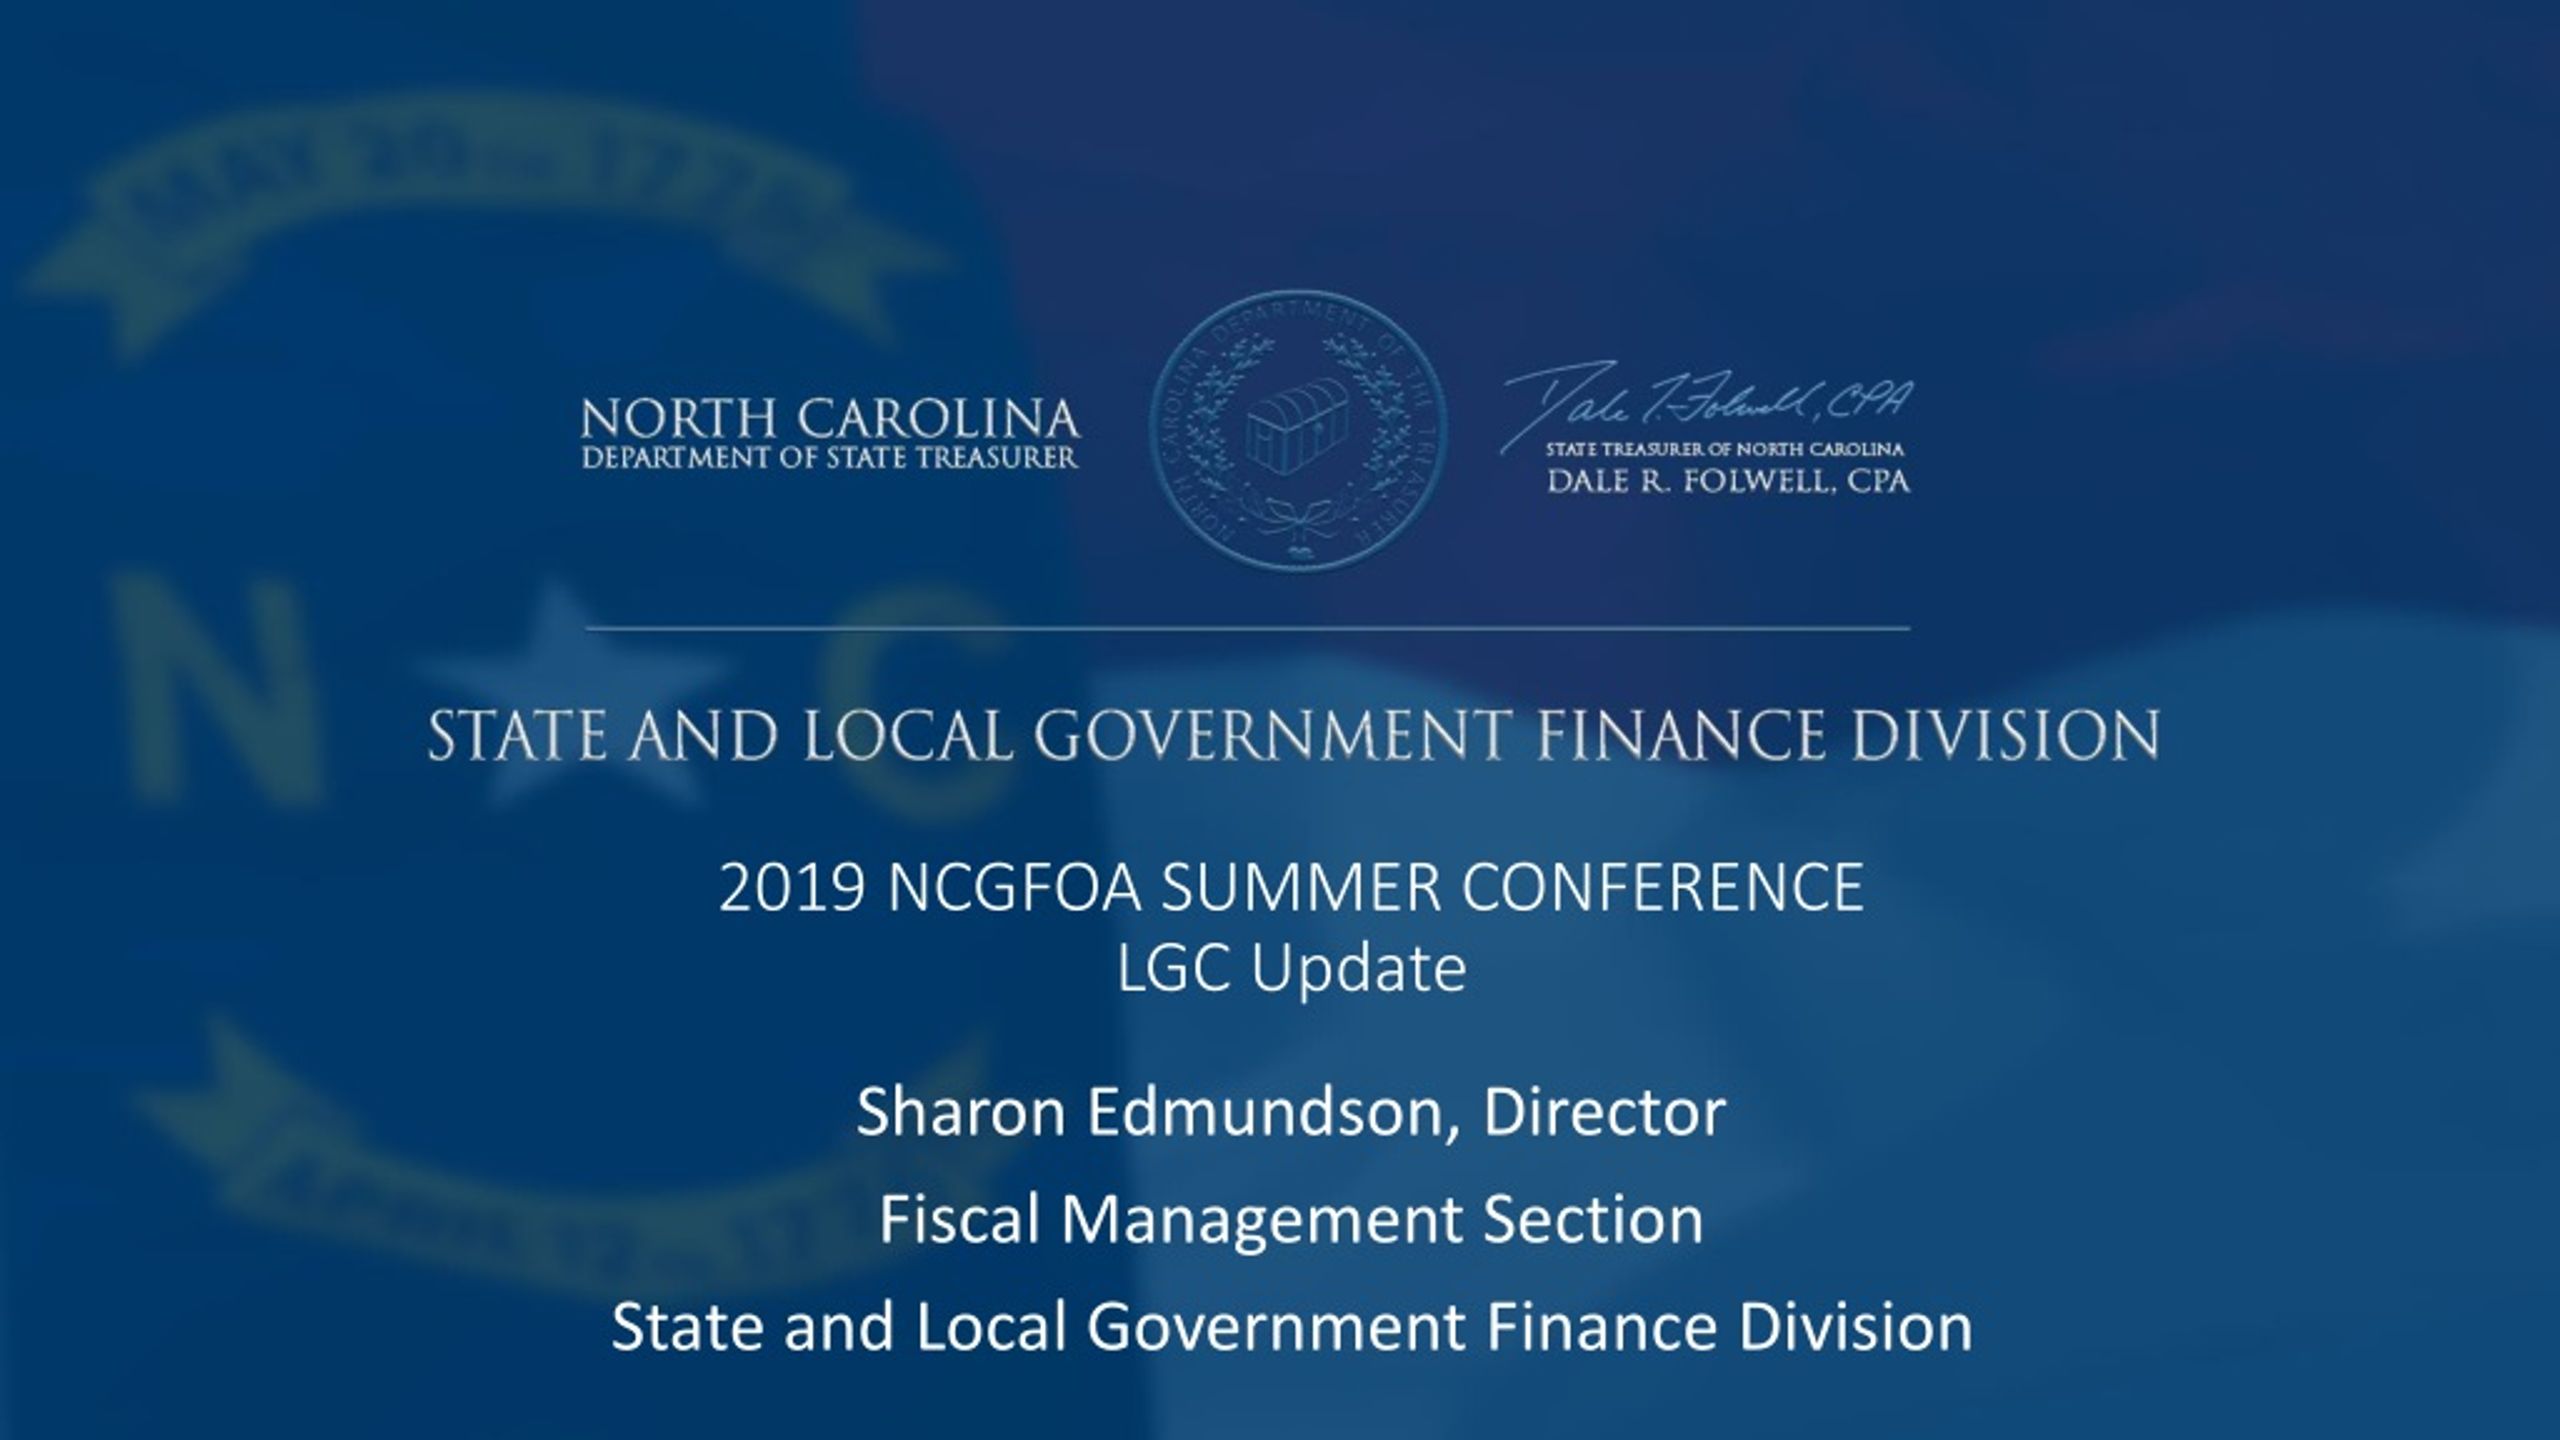 PPT LGC Update 2019 NCGFOA Summer Conference PowerPoint Presentation